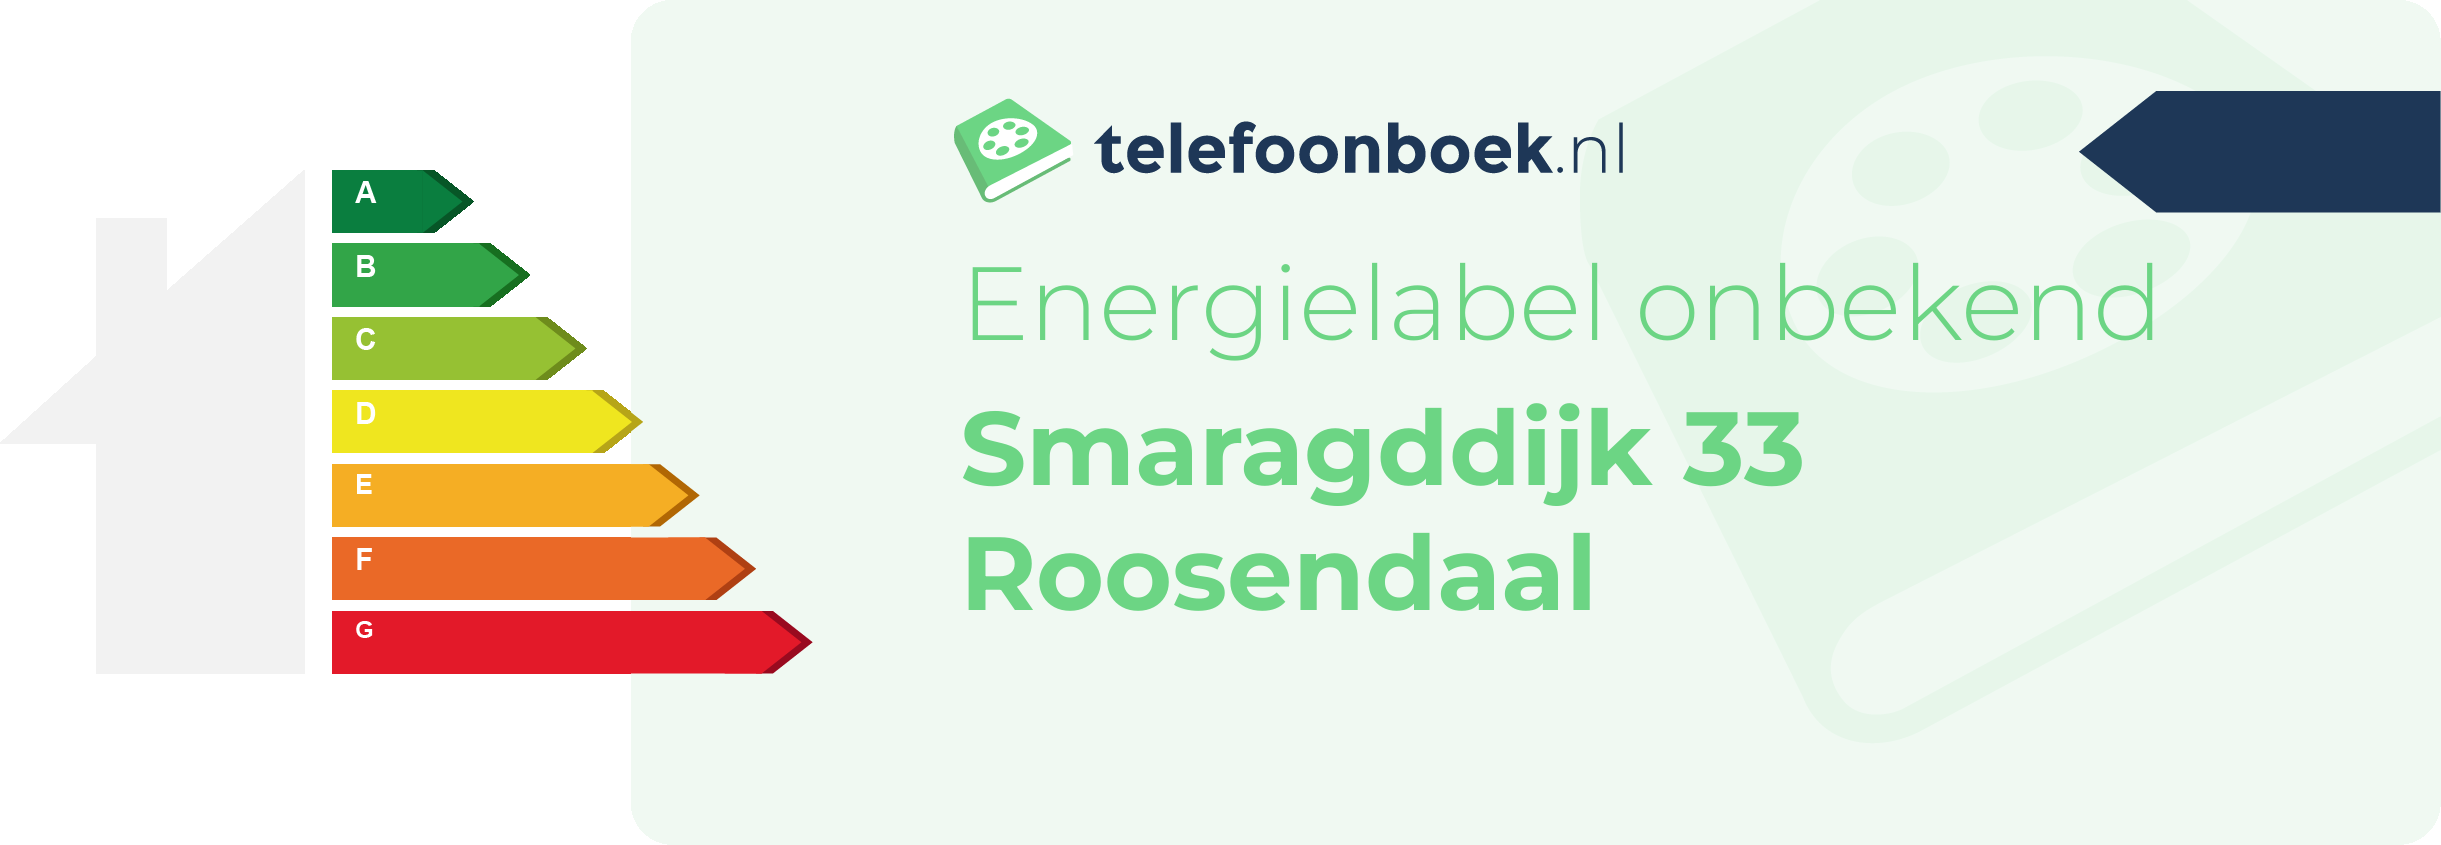 Energielabel Smaragddijk 33 Roosendaal